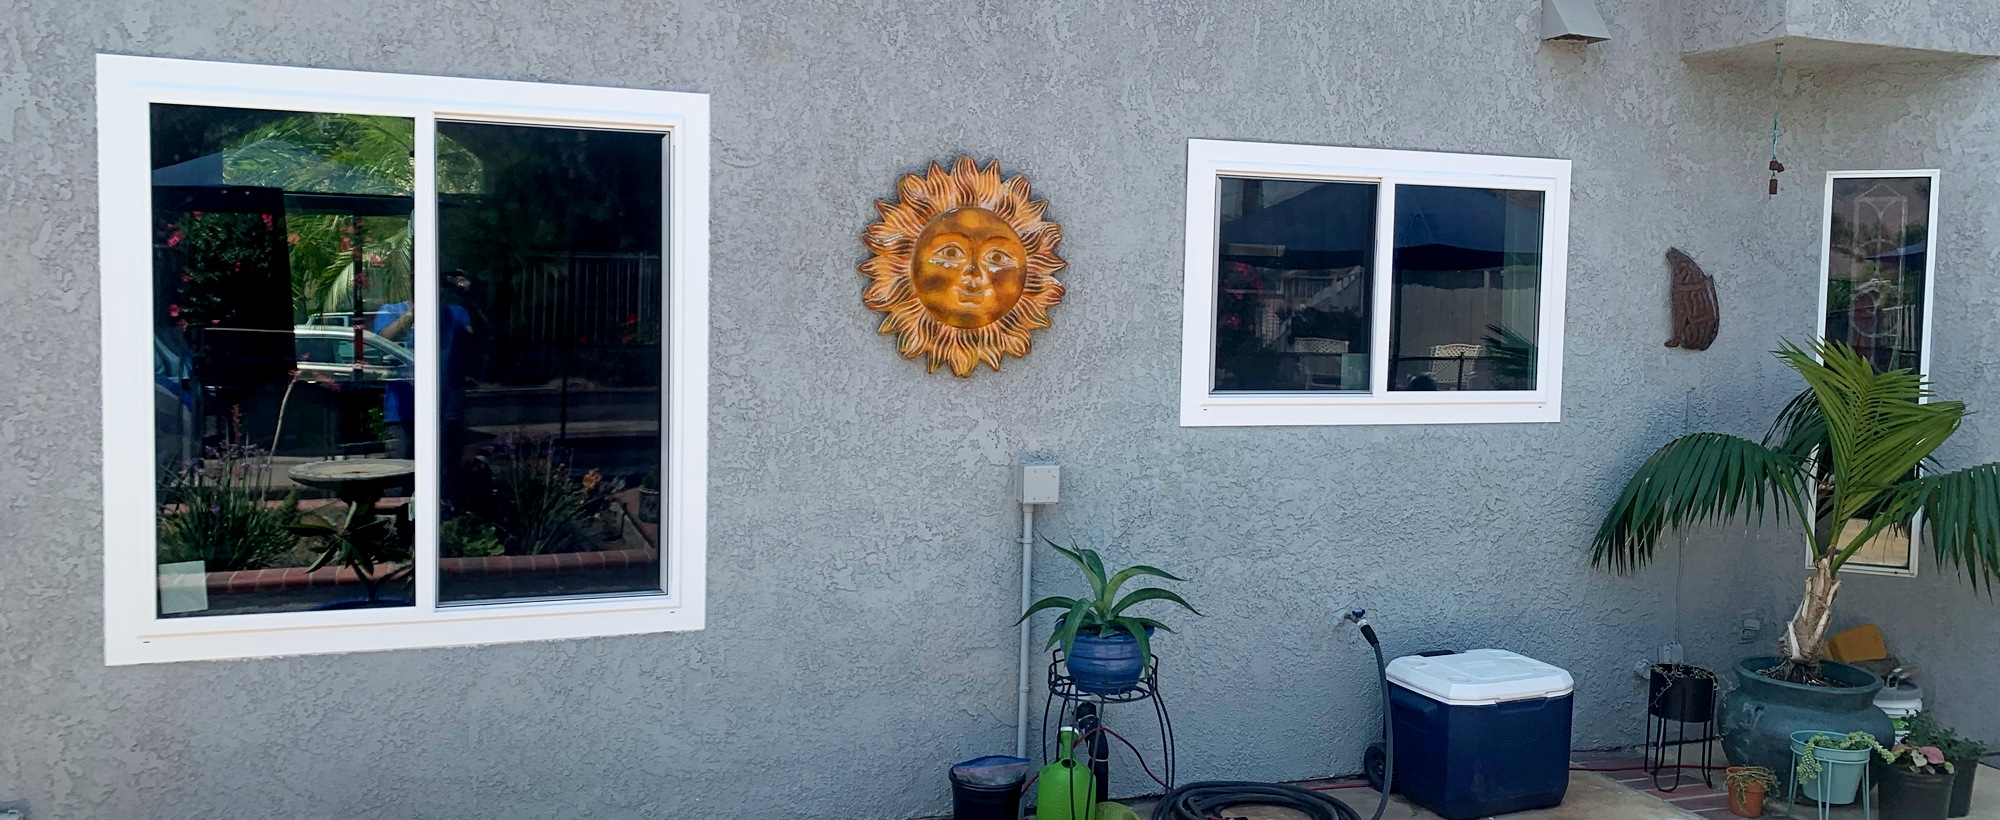 Window Replacement in Fontana, CA